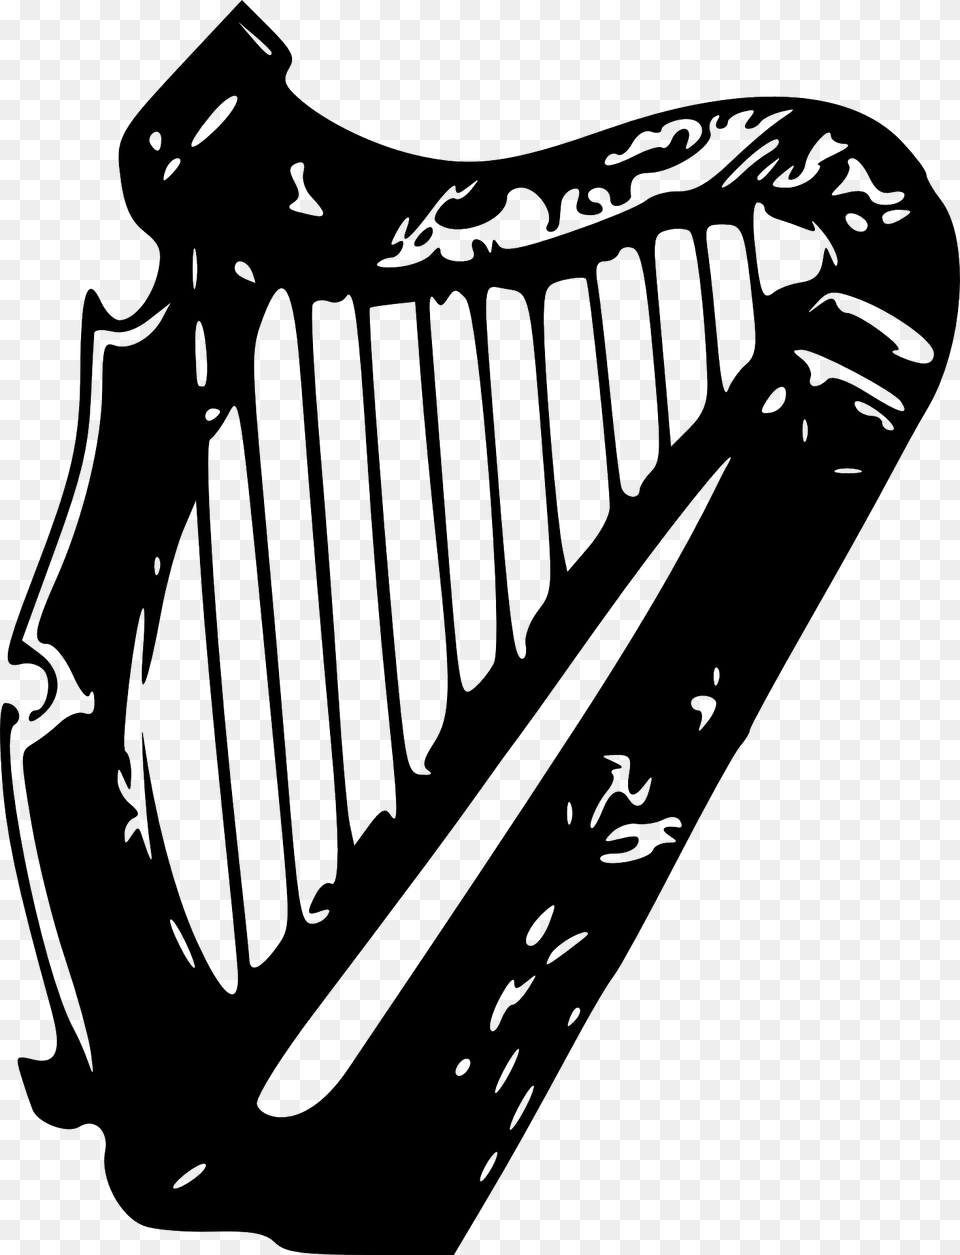 Irish Harp No Background, Musical Instrument, Smoke Pipe, Lyre Png Image